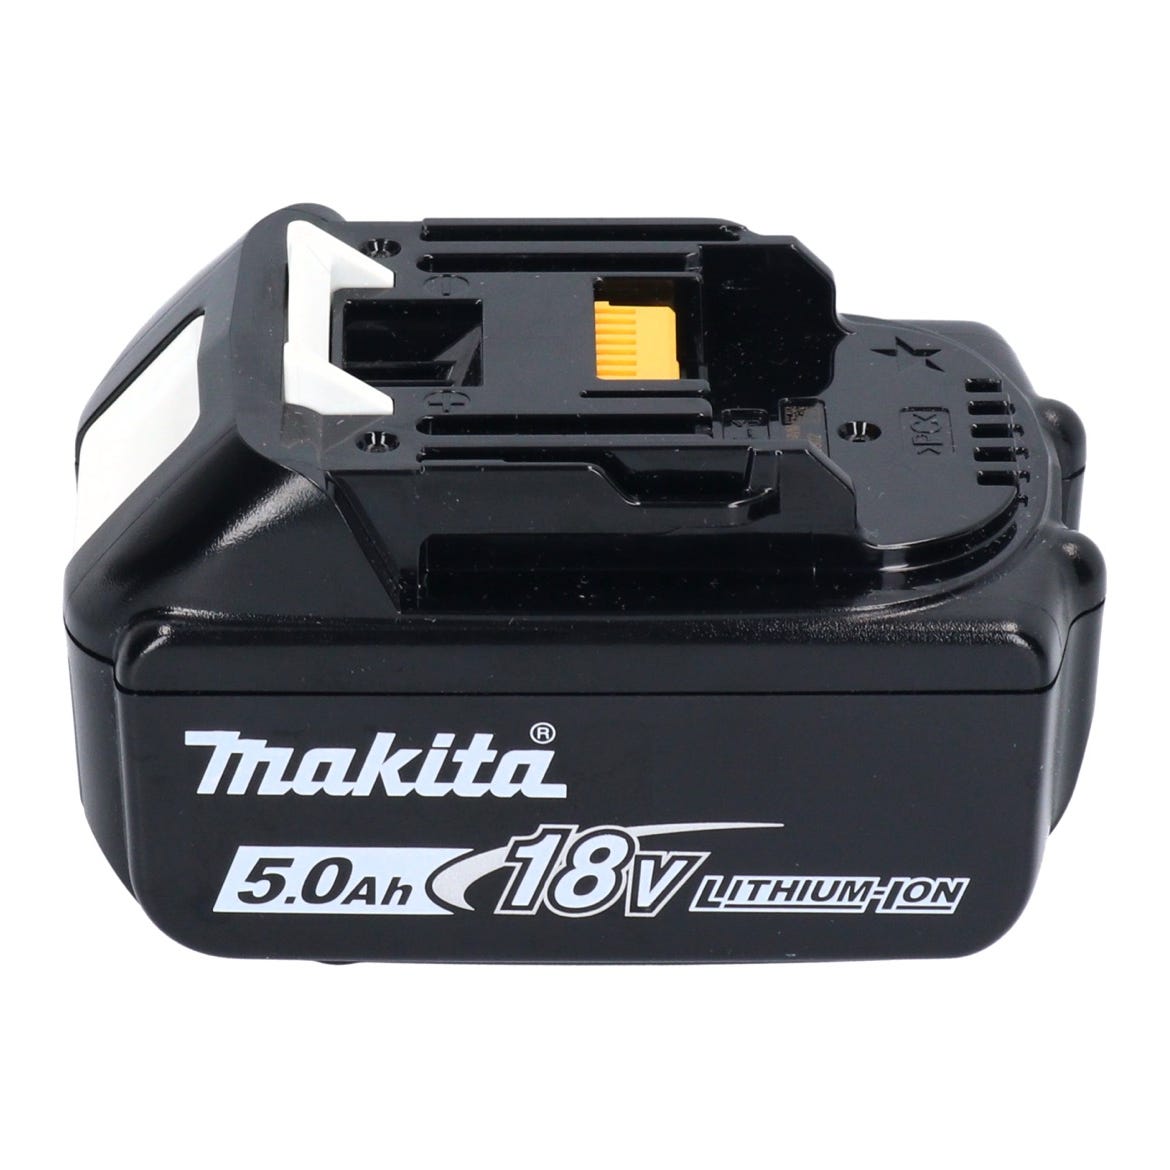 Makita DJV 185 T1 Scie sauteuse pendulaire sans fil 18 V Brushless + 1x batterie 5,0 Ah - sans kit chargeur 2